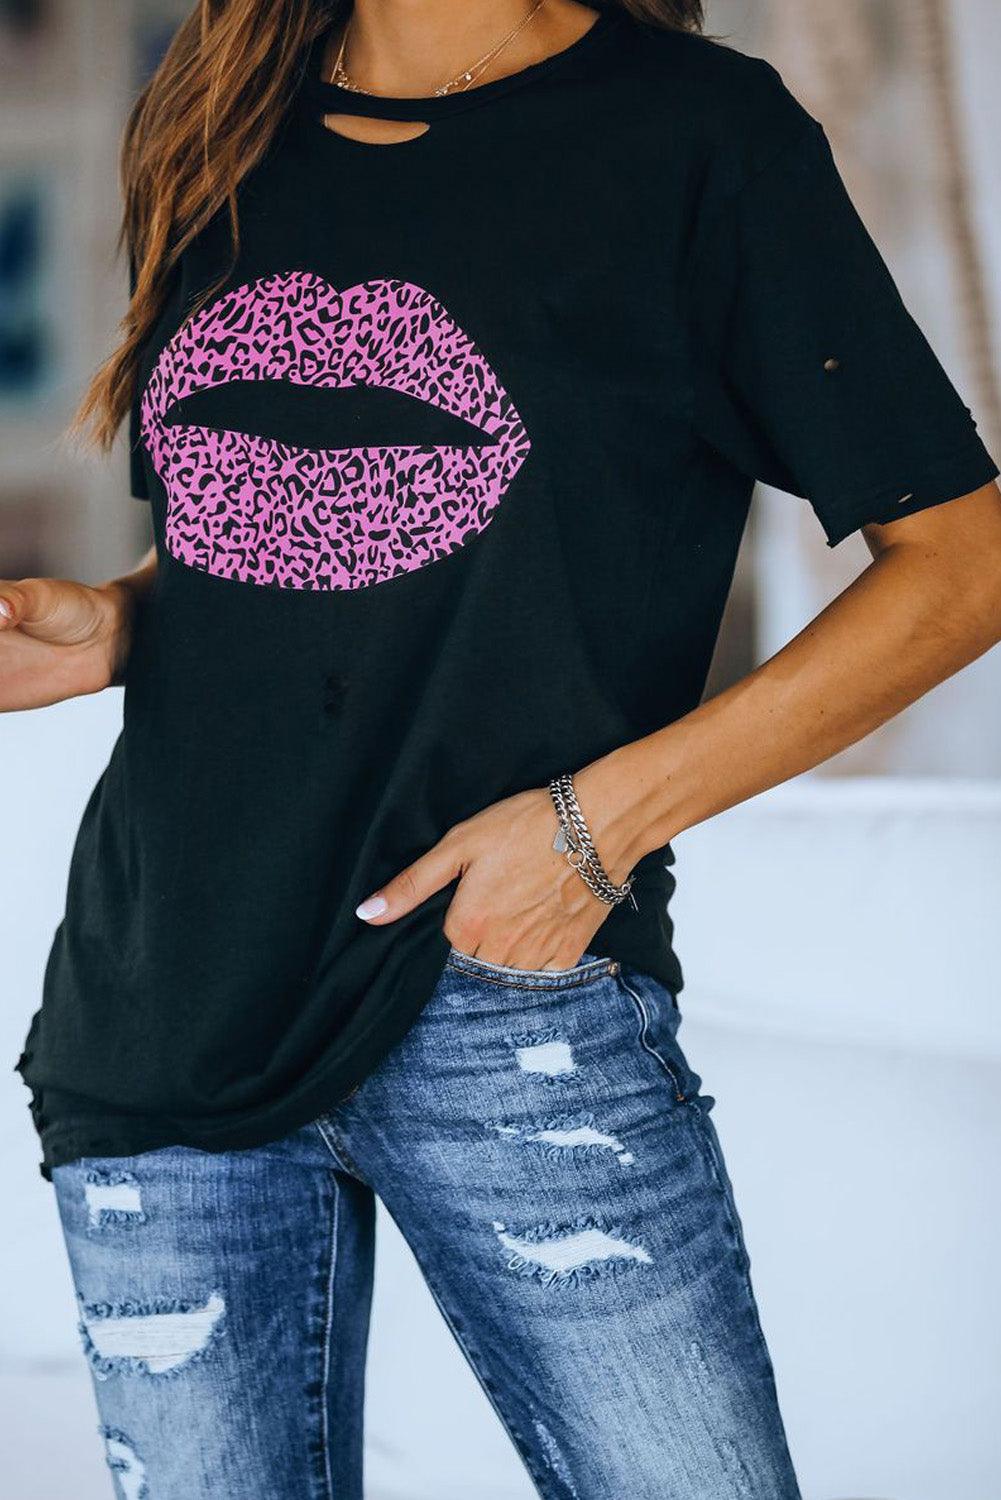 Leopard Lip Distressed T-Shirt - Rico Goods by Rico Suarez